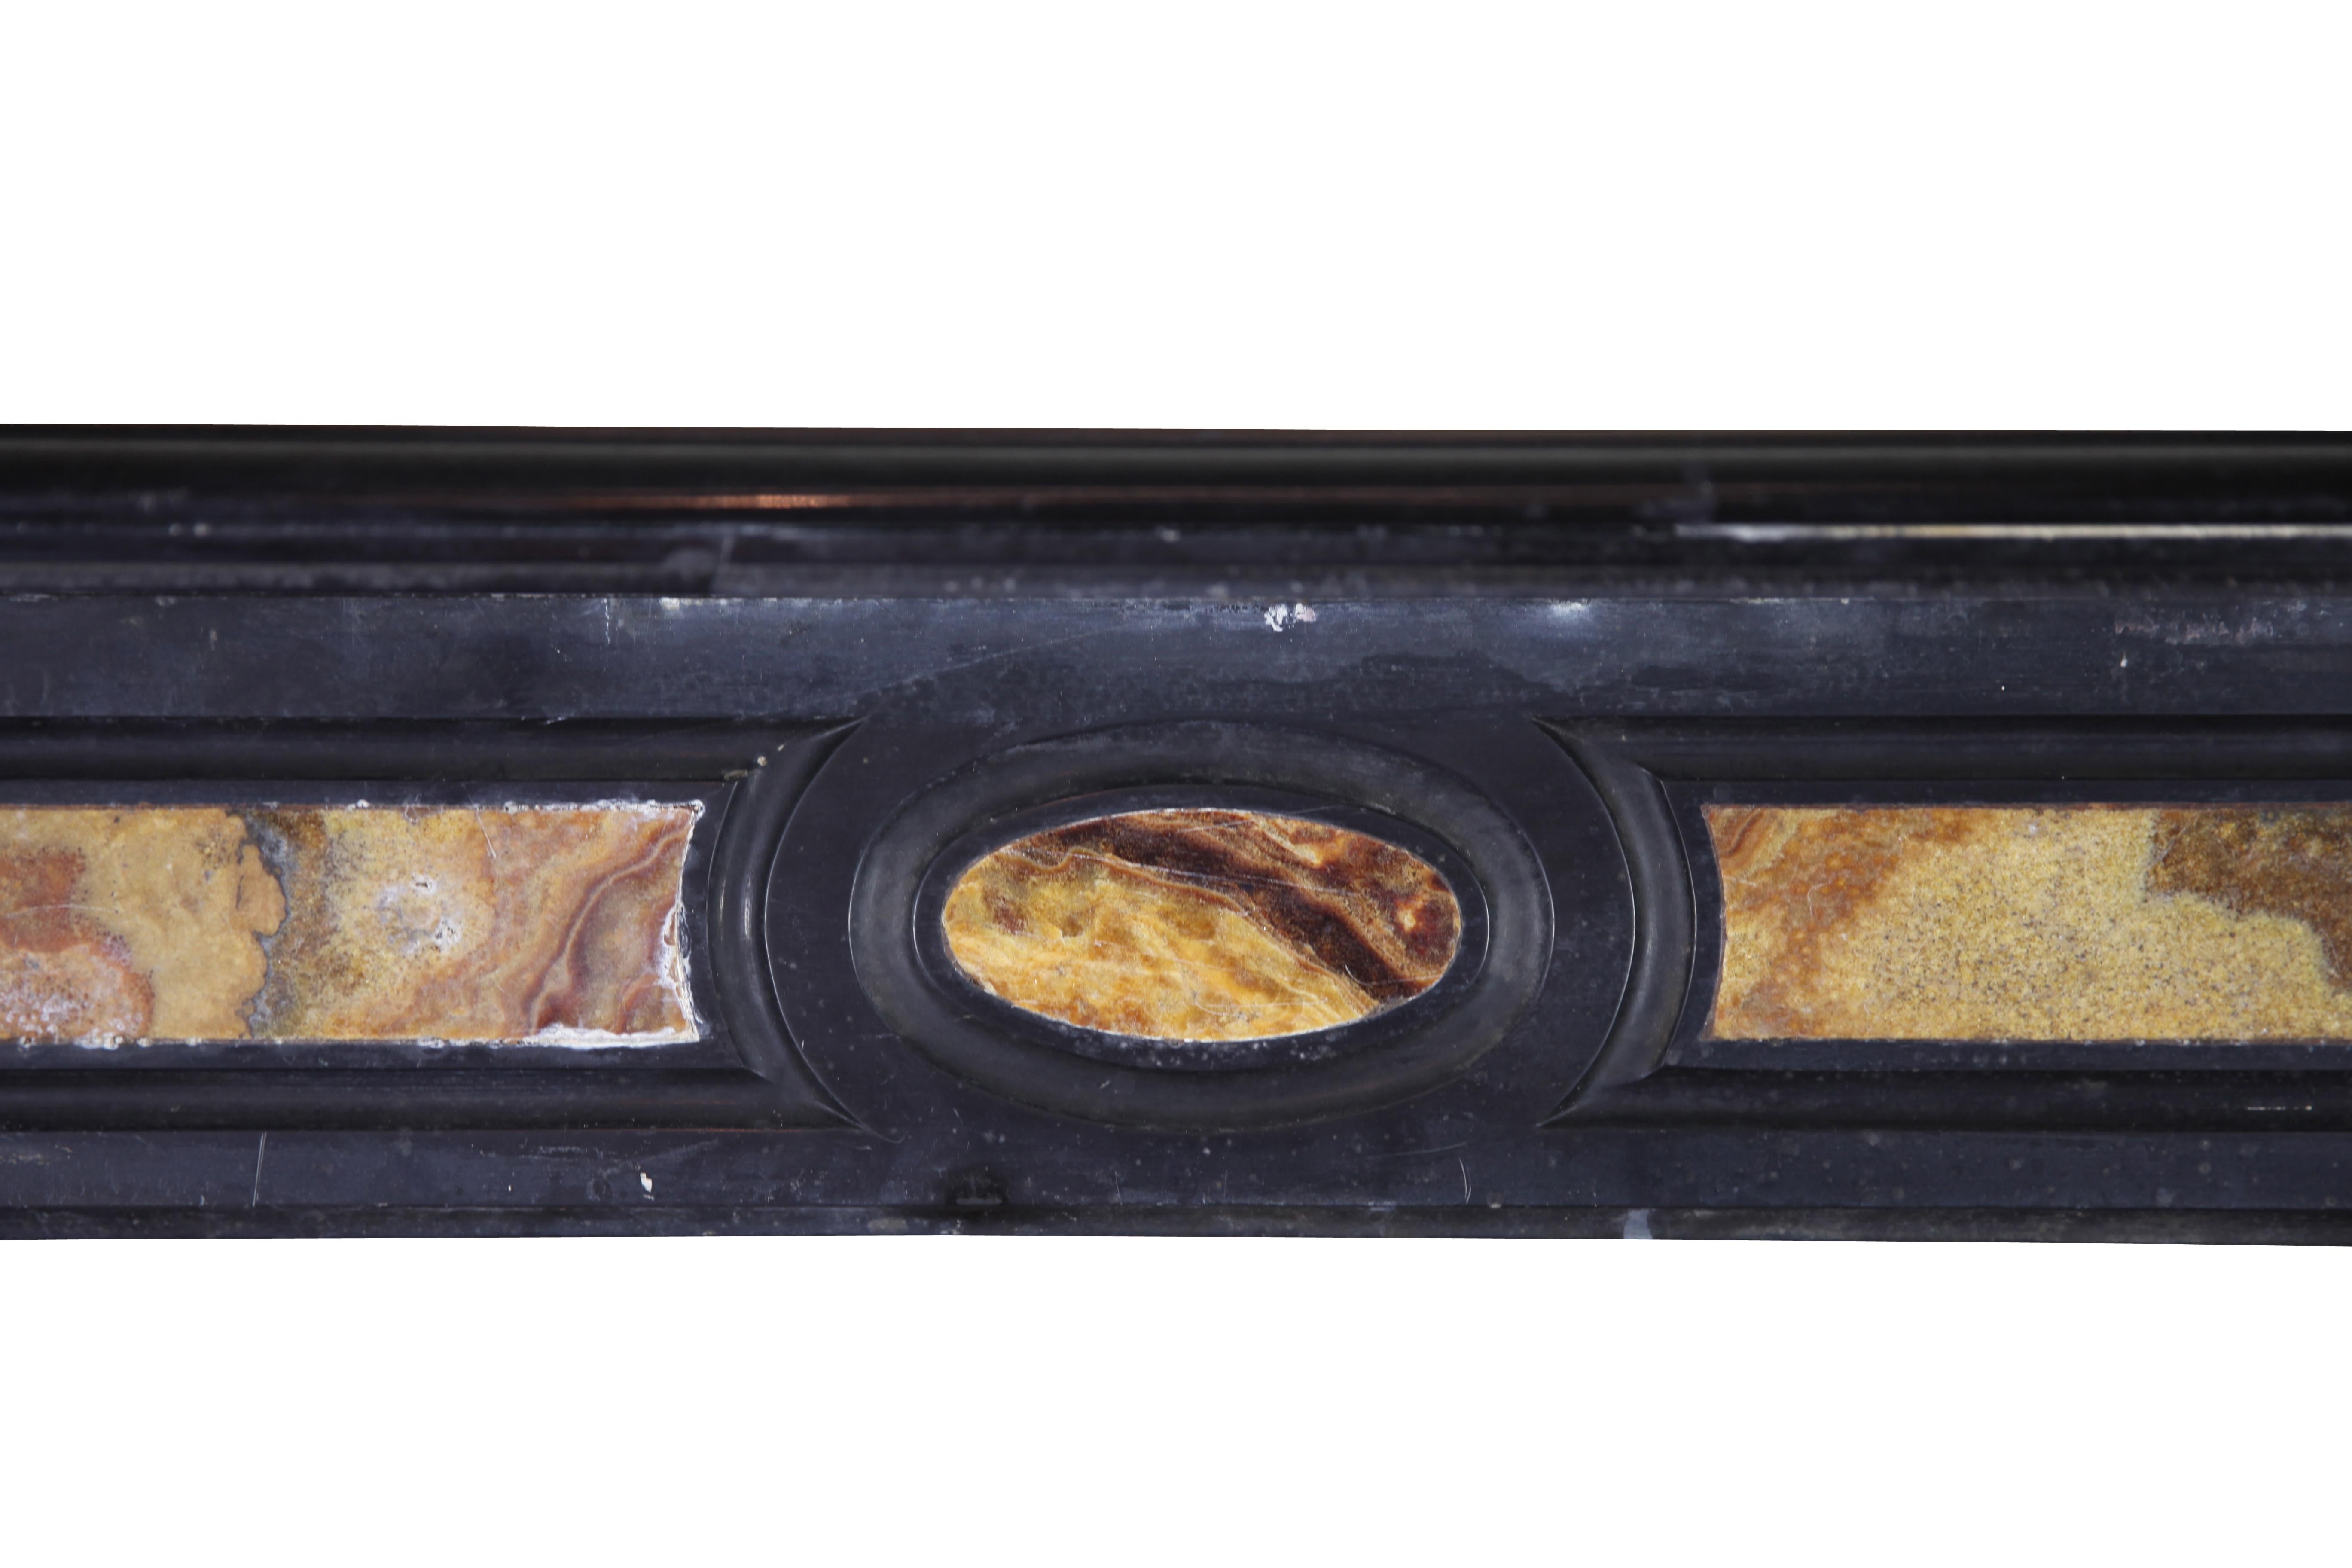 A Noir de Mazy en Onyx marble combination vintage fireplace surround from the Louis Phillipe period, 19th century.
Measures:
130 cm exterior width 51.18 inch
105 cm exterior height 41.34 inch
89 cm interior width 35.03 inch
87 cm interior